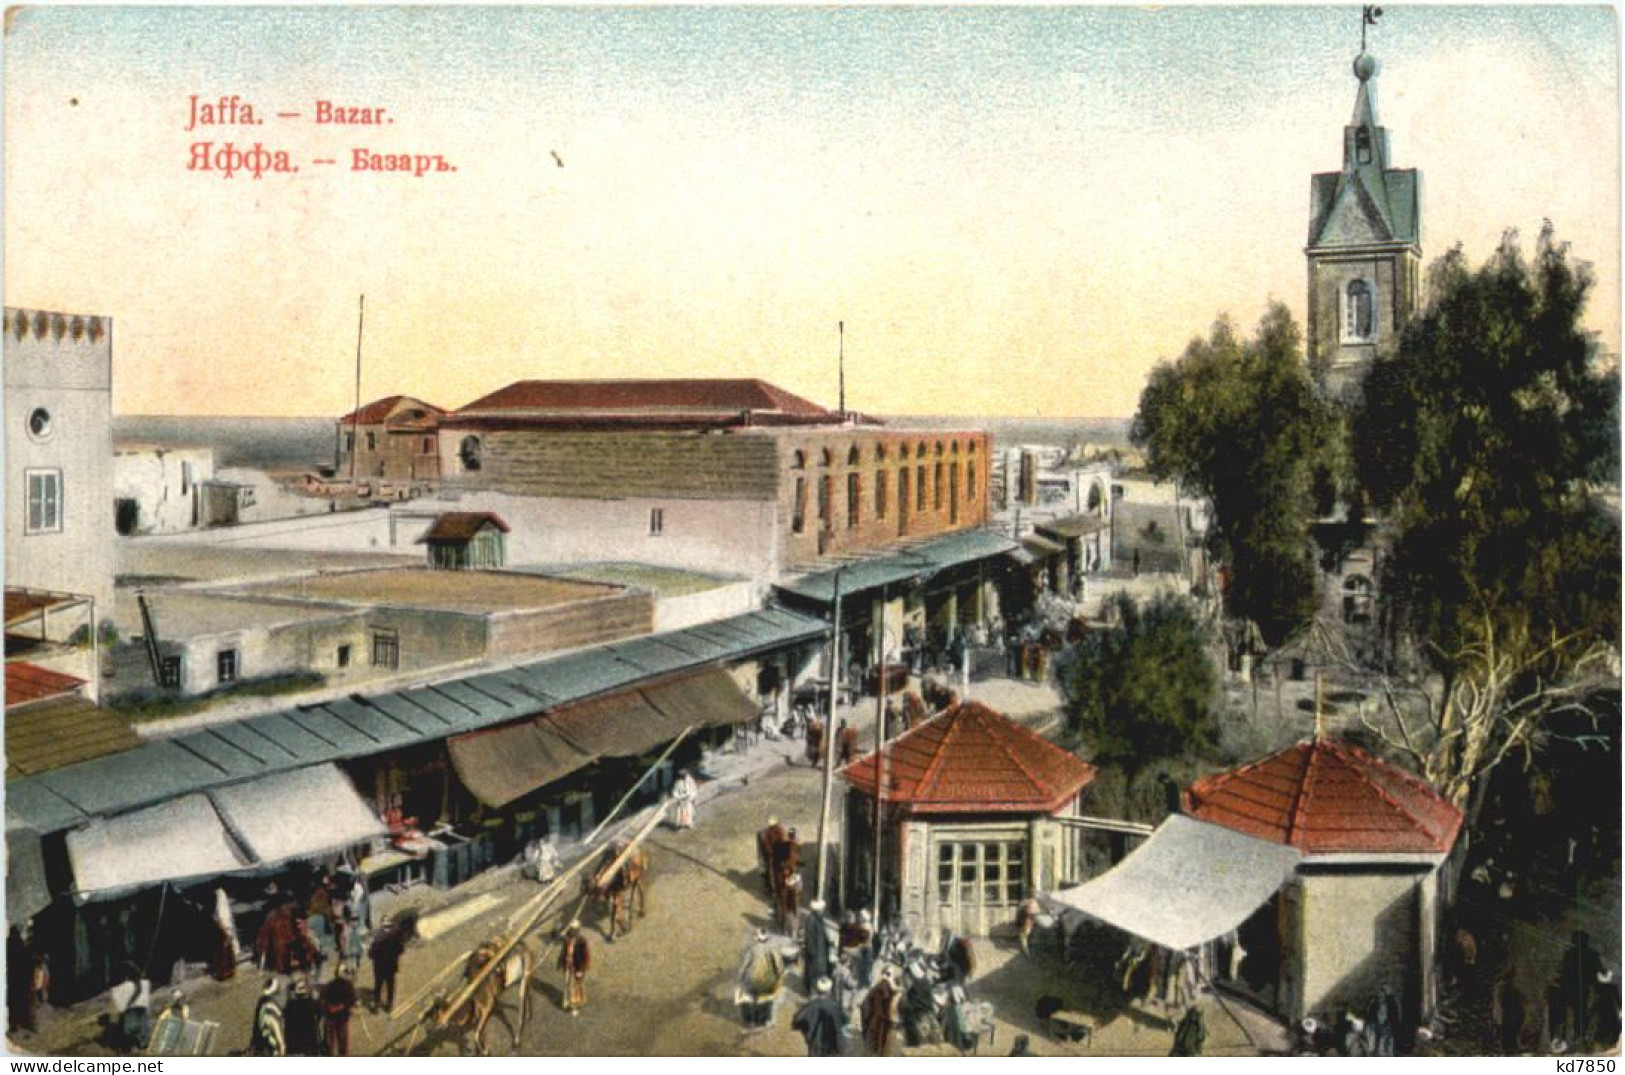 Jaffa - Bazar - Palestine